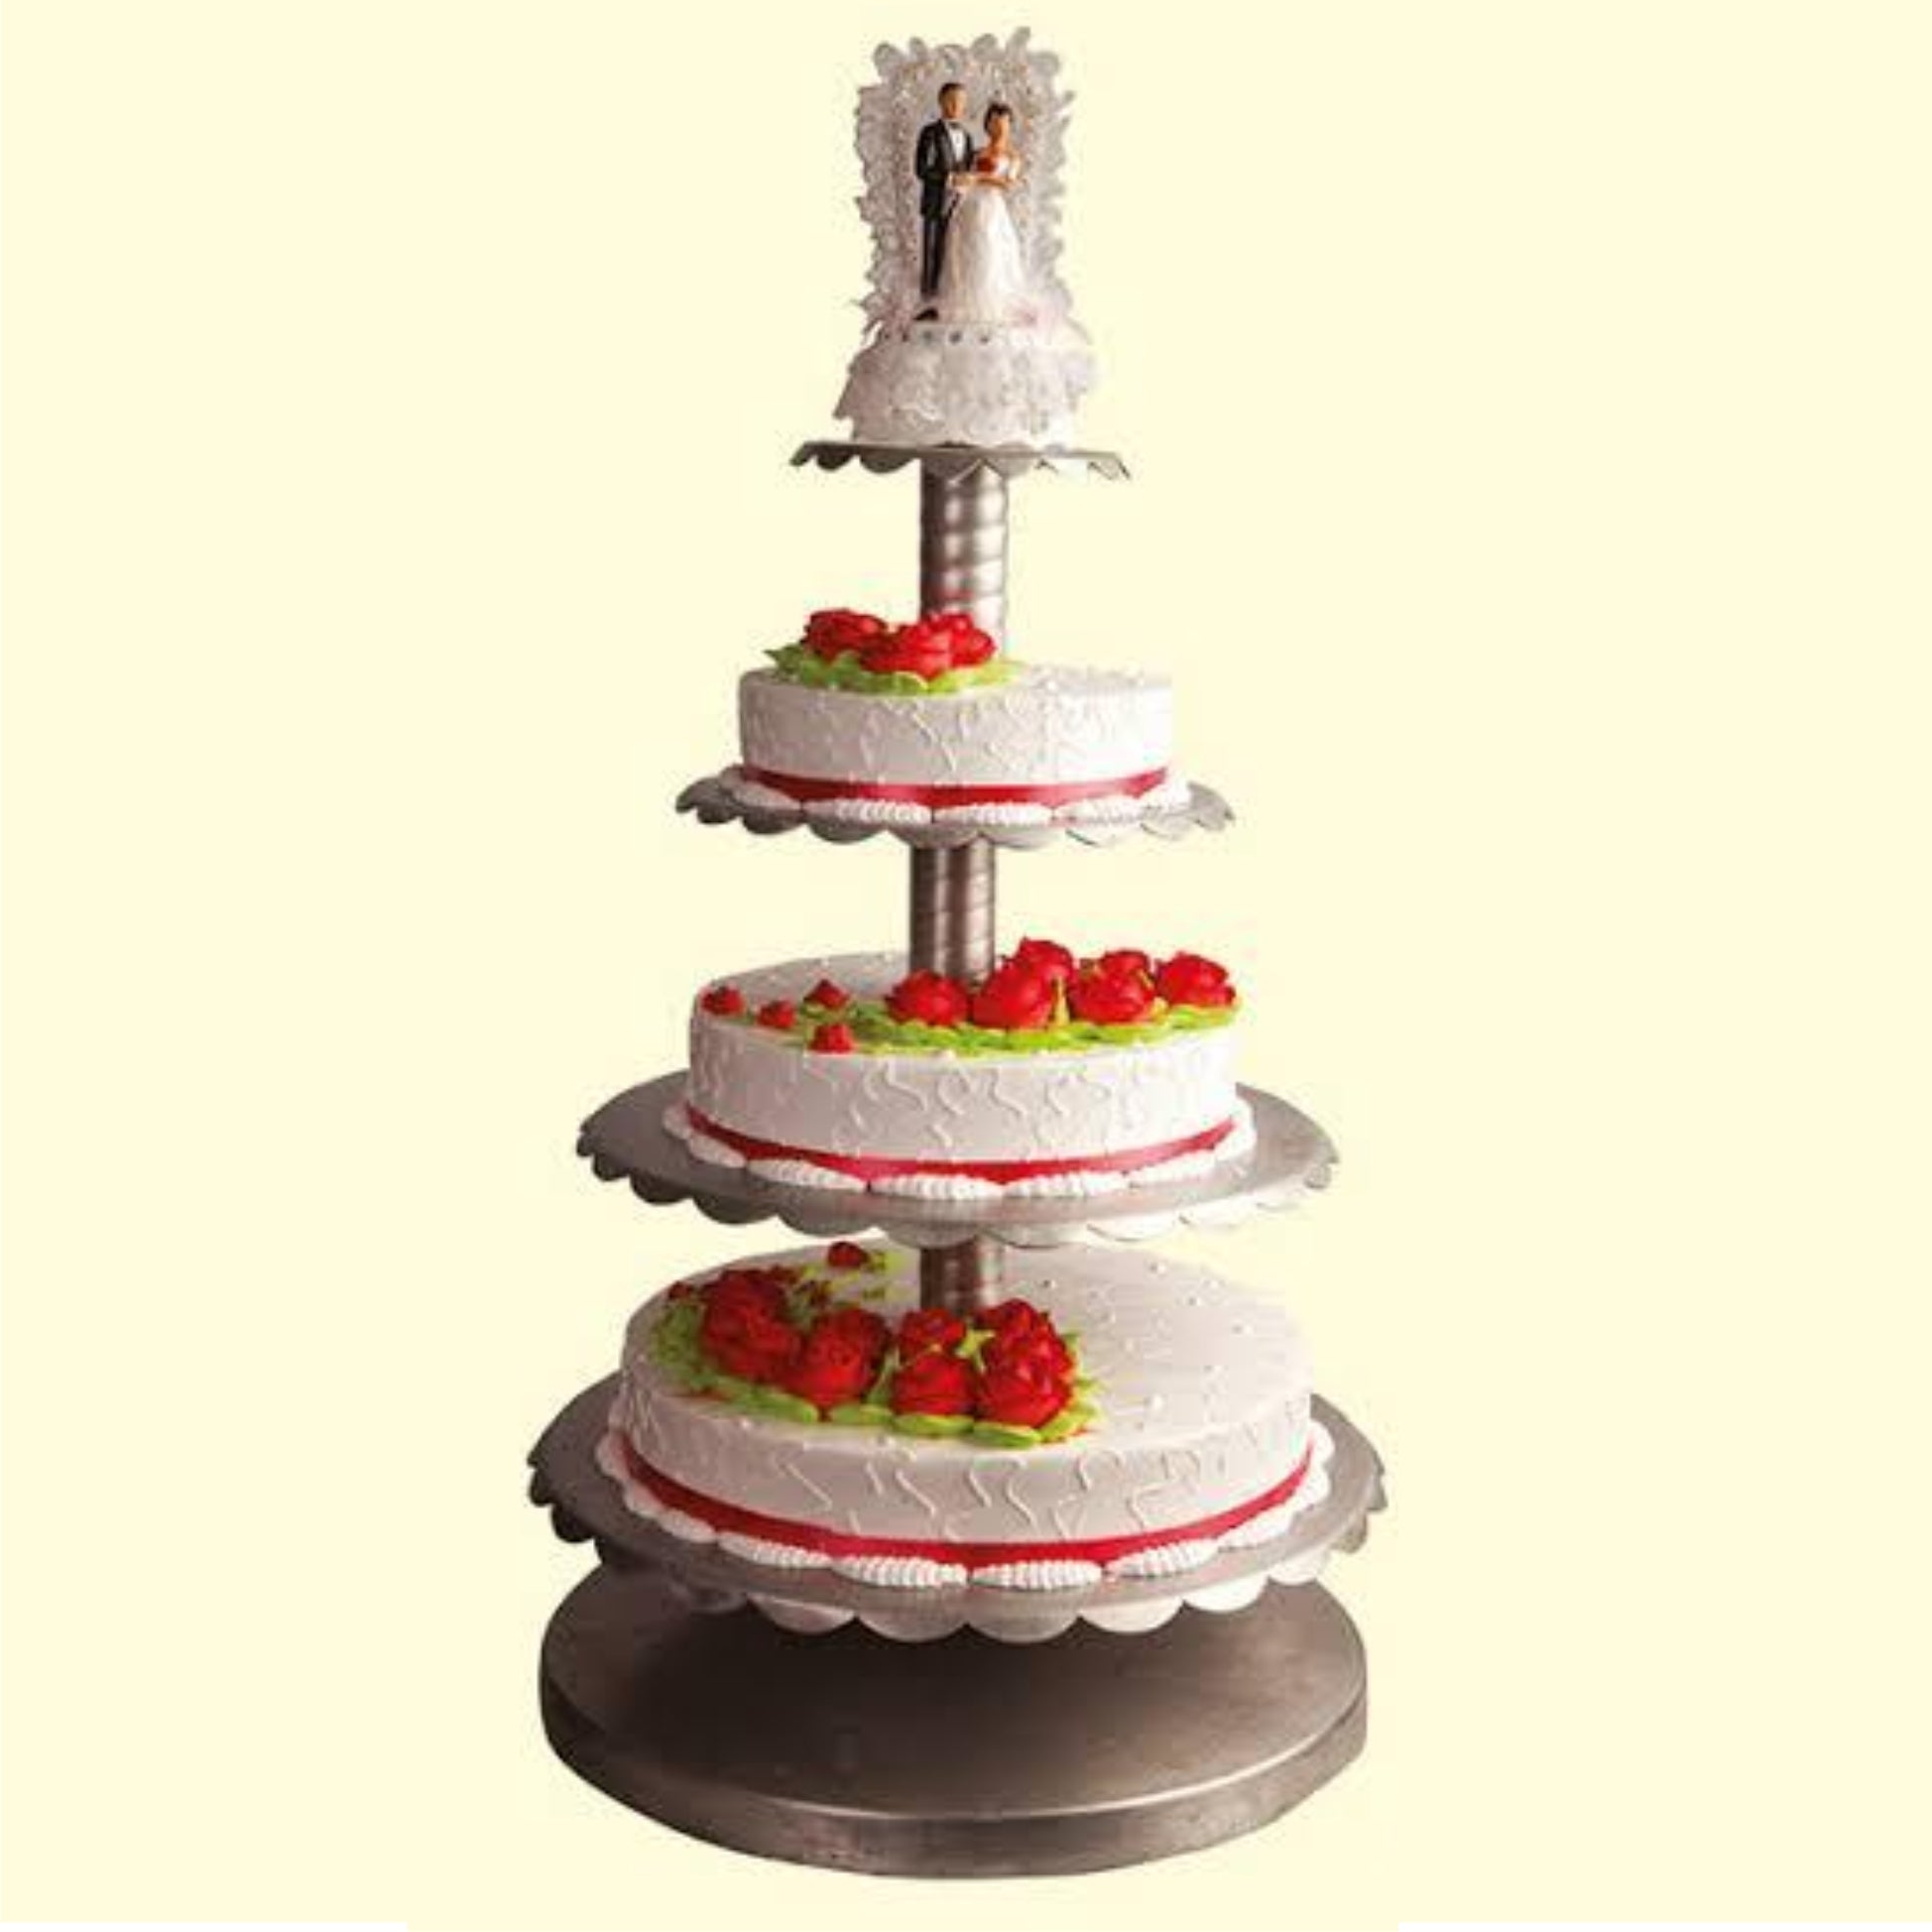 26 Three-Tier Wedding Cake Ideas That Are Super Sweet